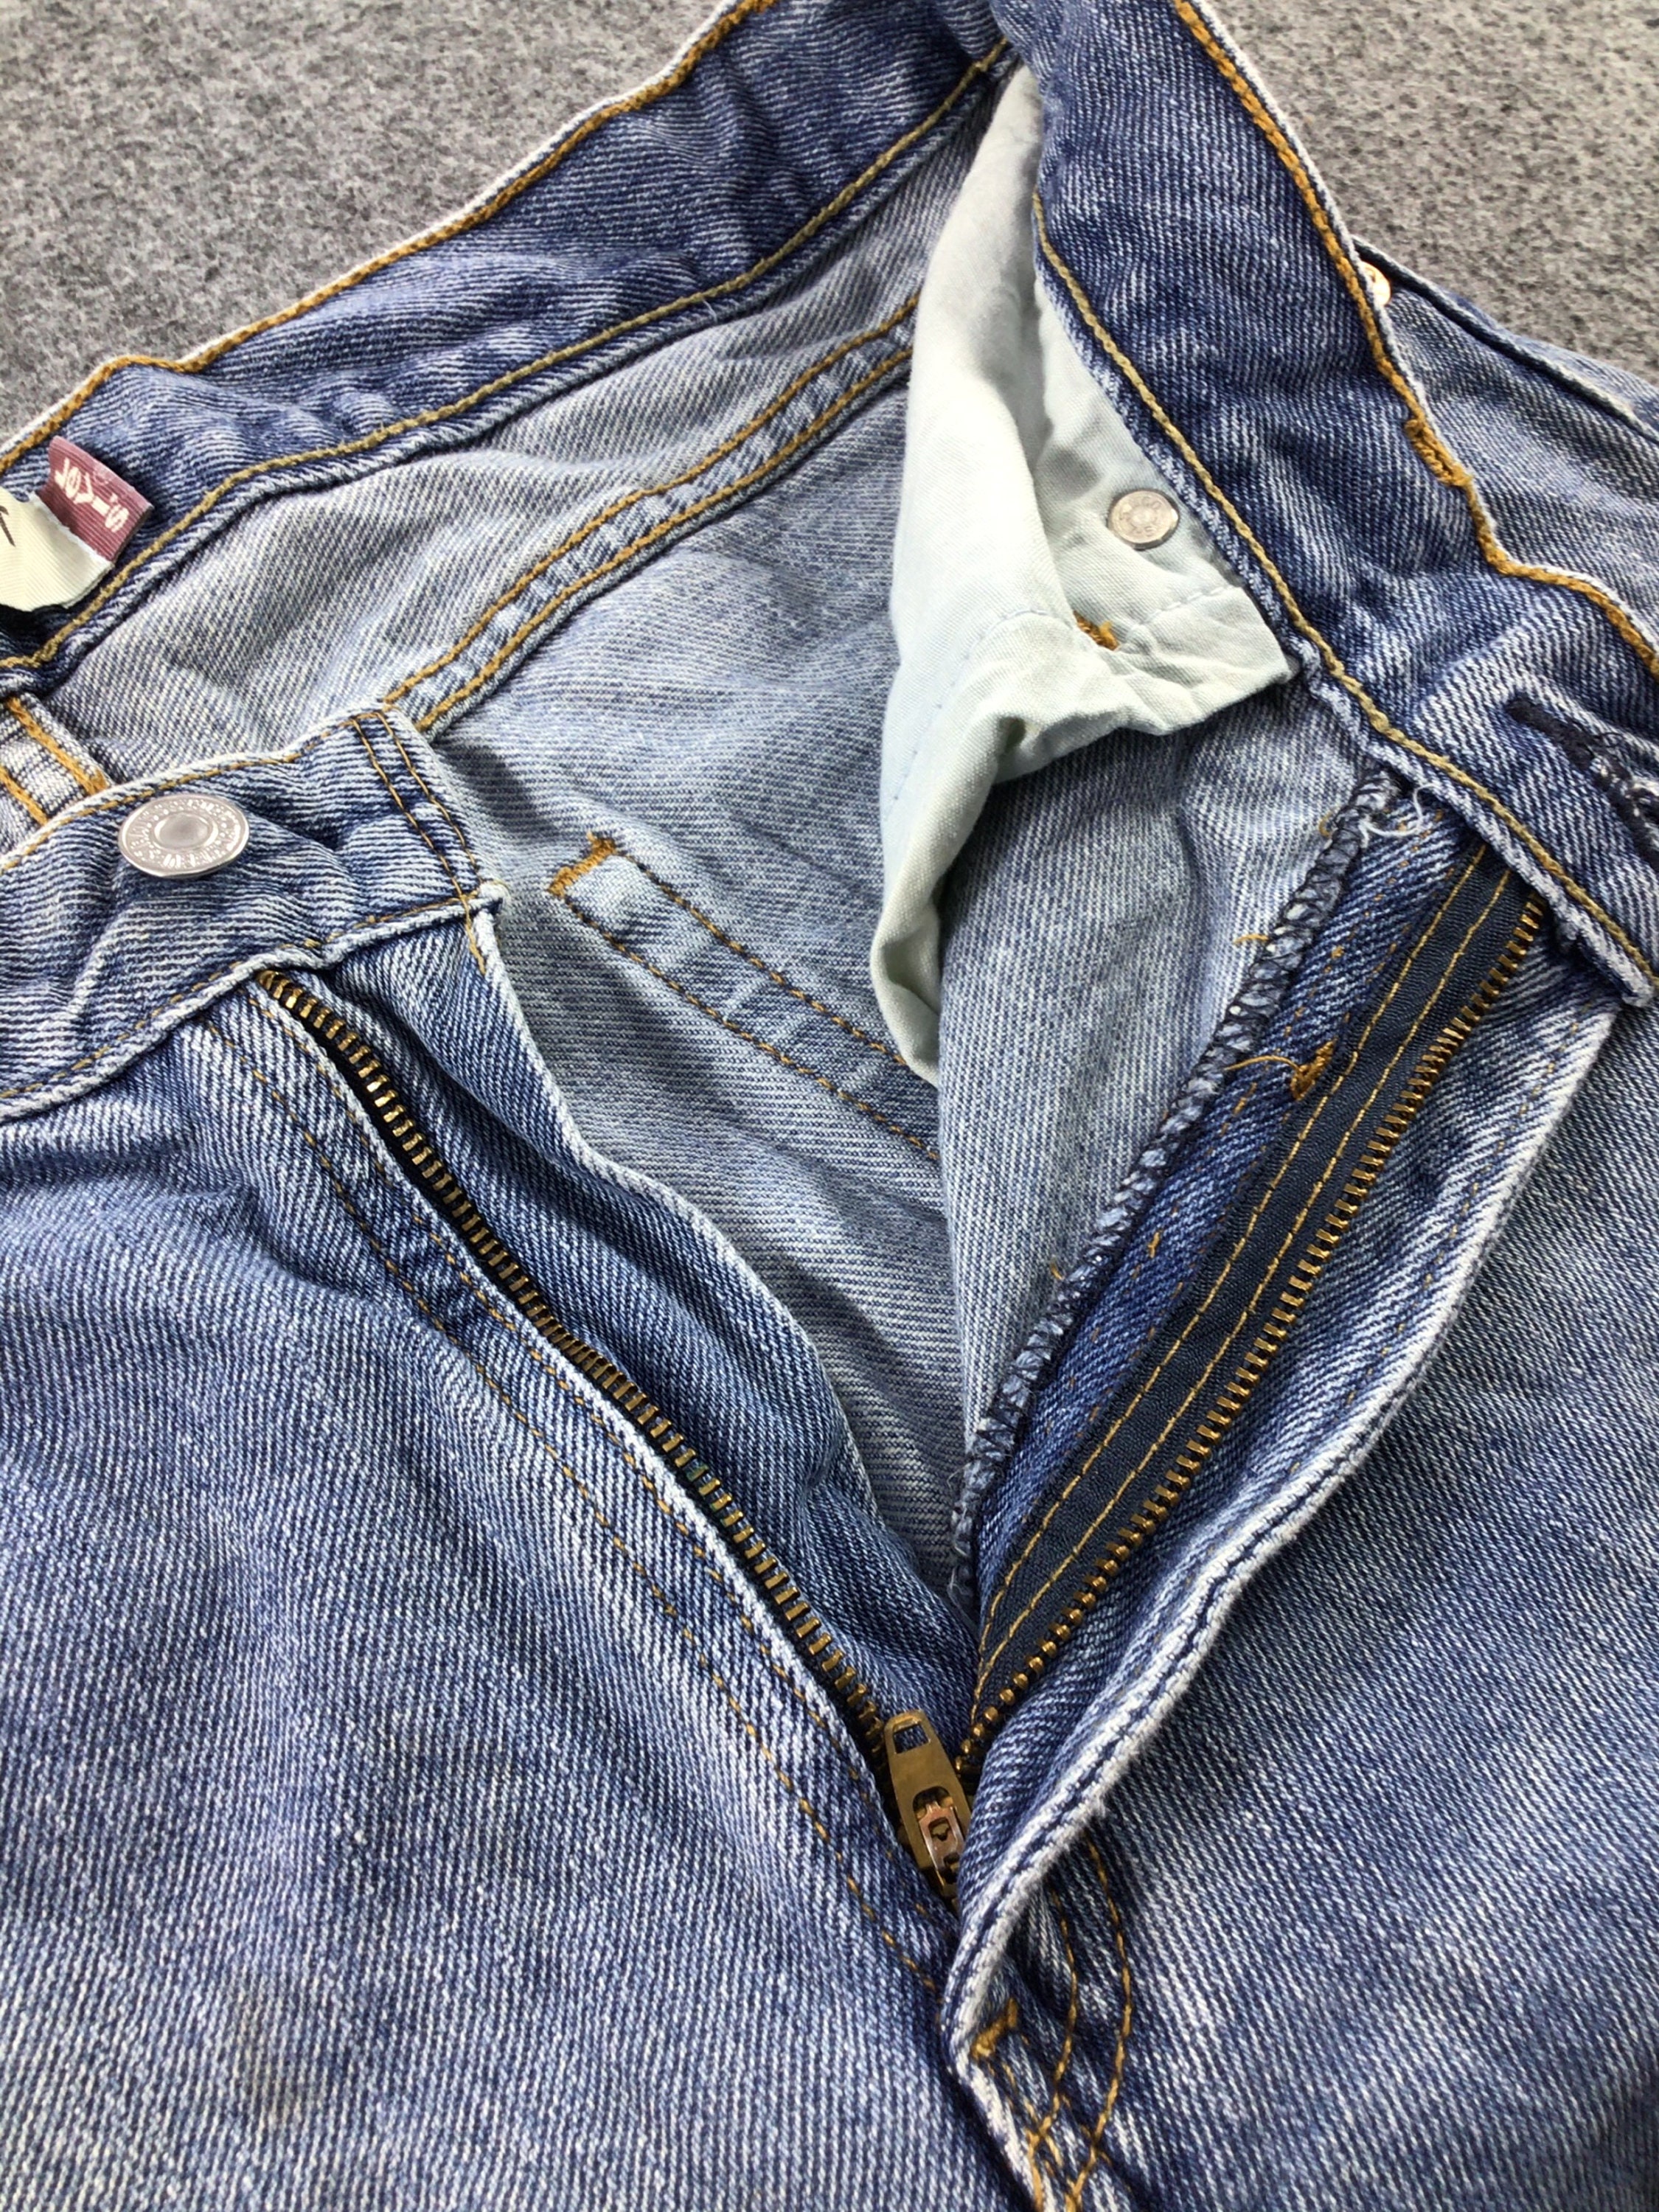 Vintage Levis 505 Jeans Straight Fit Jeans 33x31 | Etsy